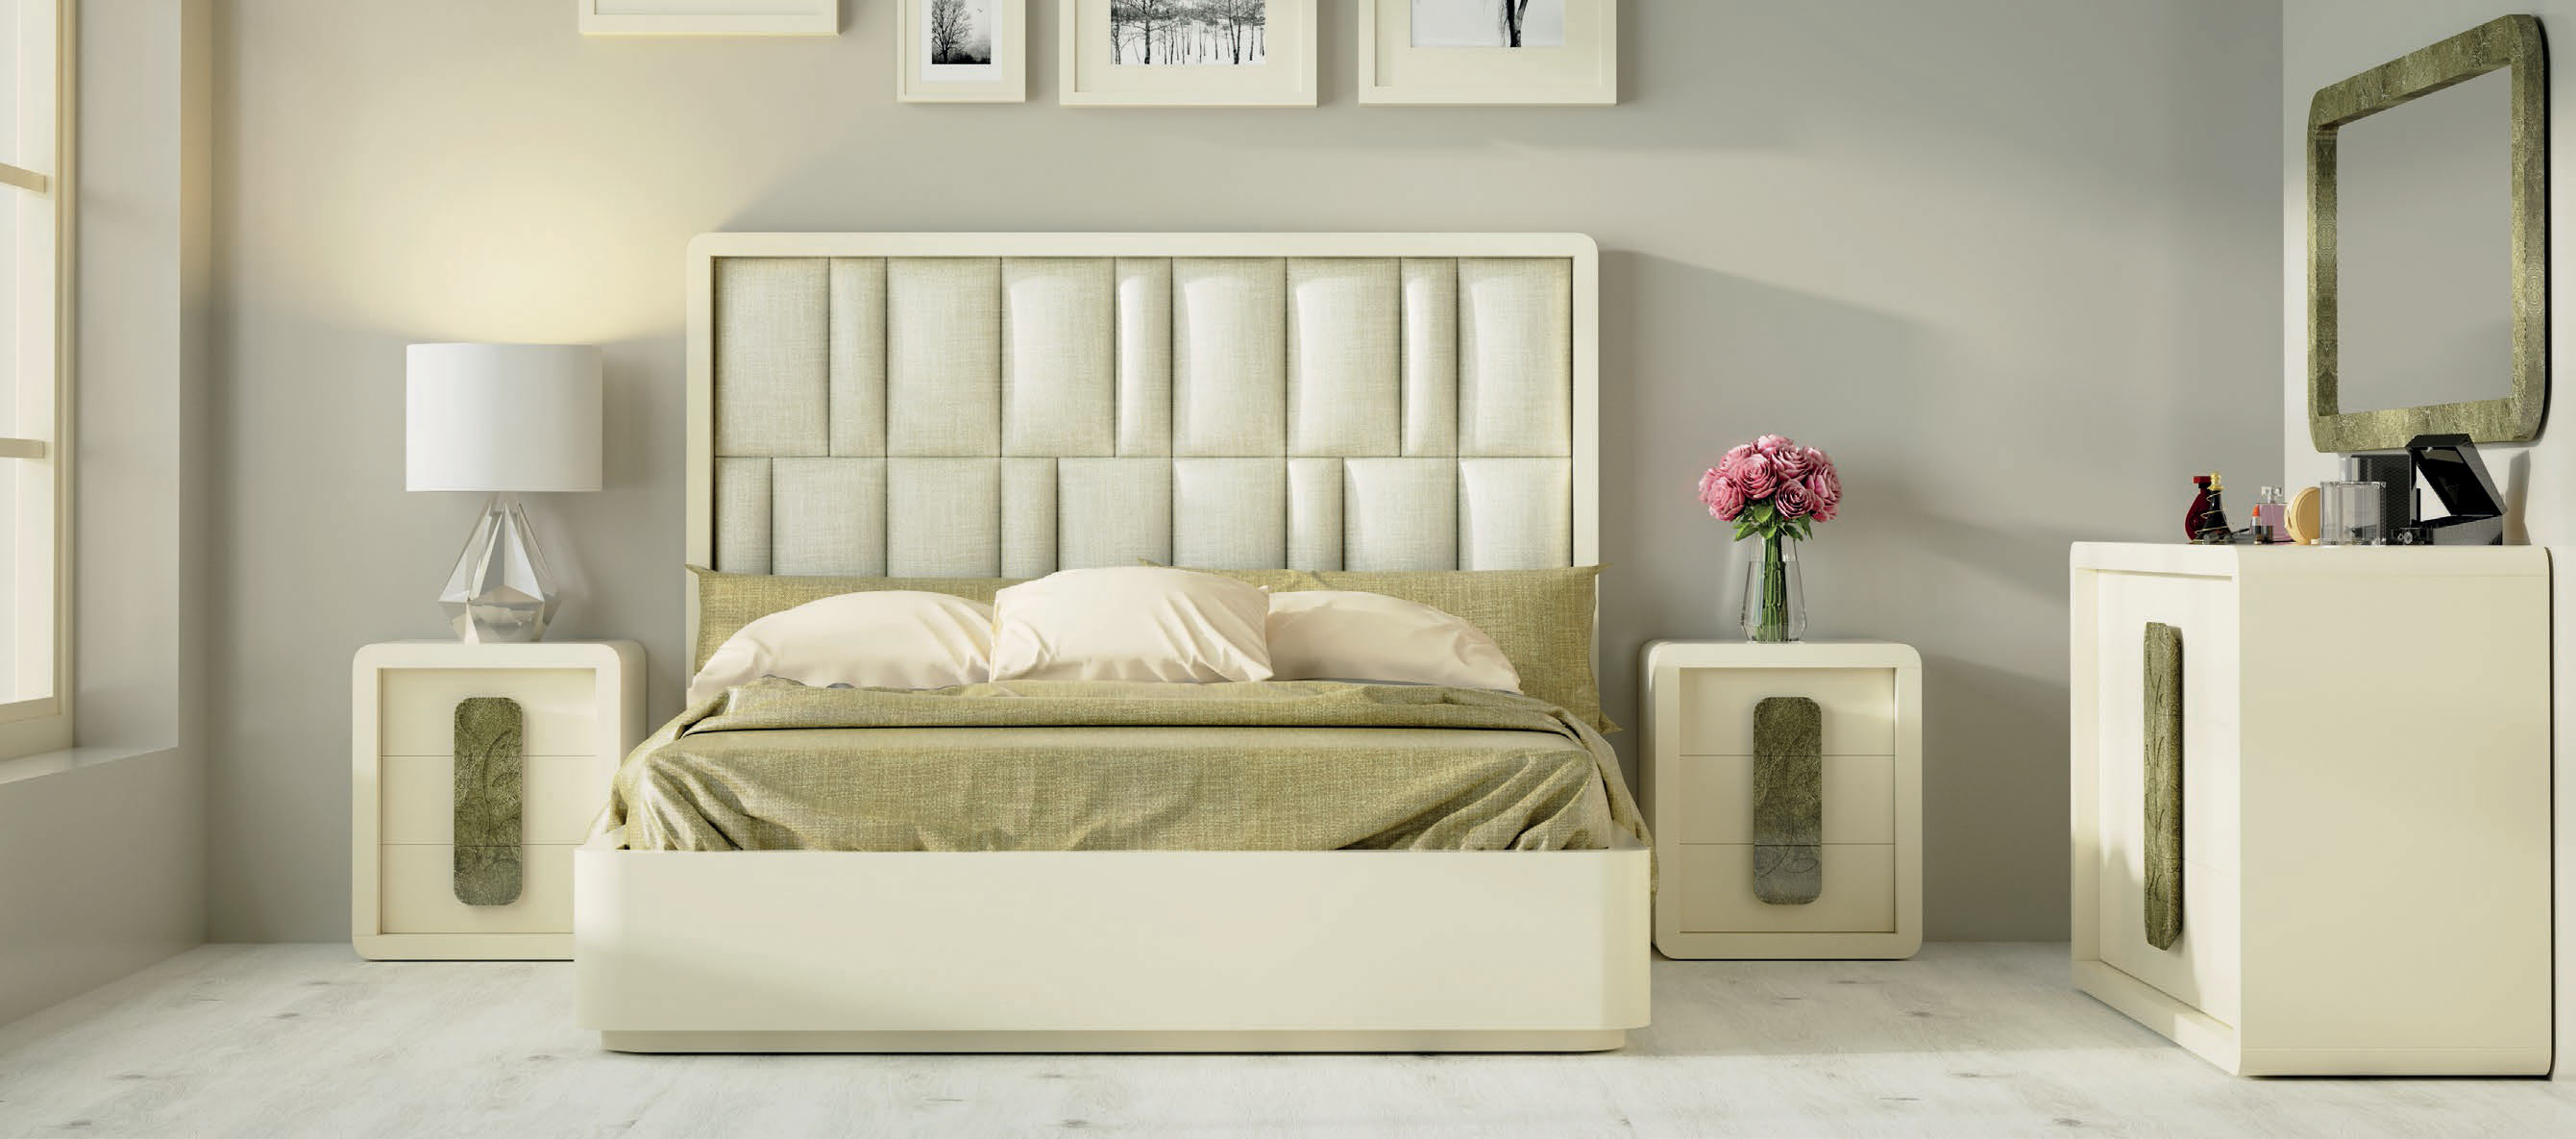 Bedroom Furniture Beds with storage DOR 169